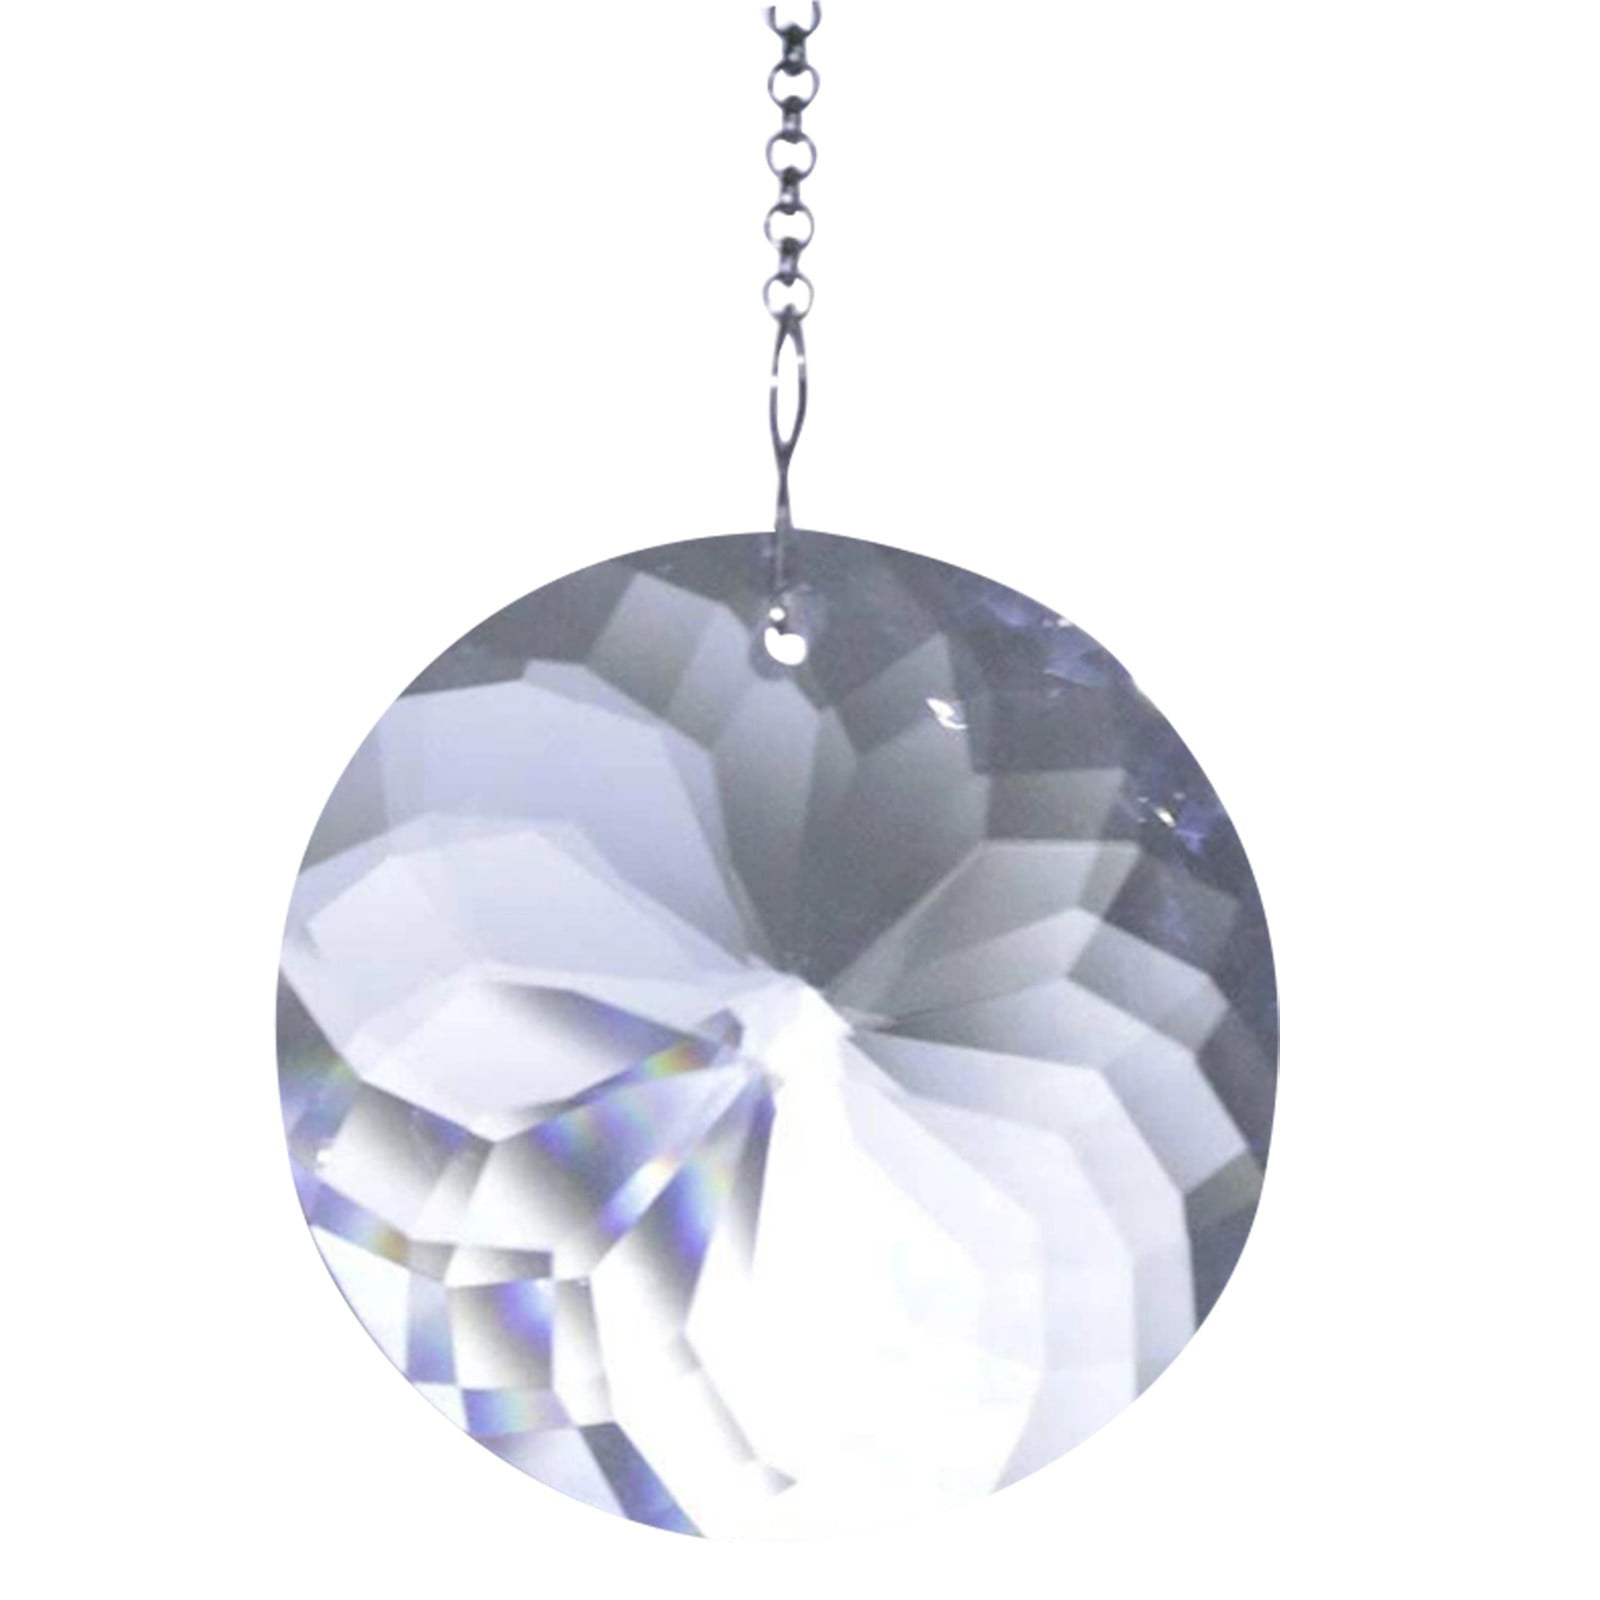 1x Crystal Ball Hanging Sphere Pendant Sun Rainbow Prism Lamp Light Chandelier 